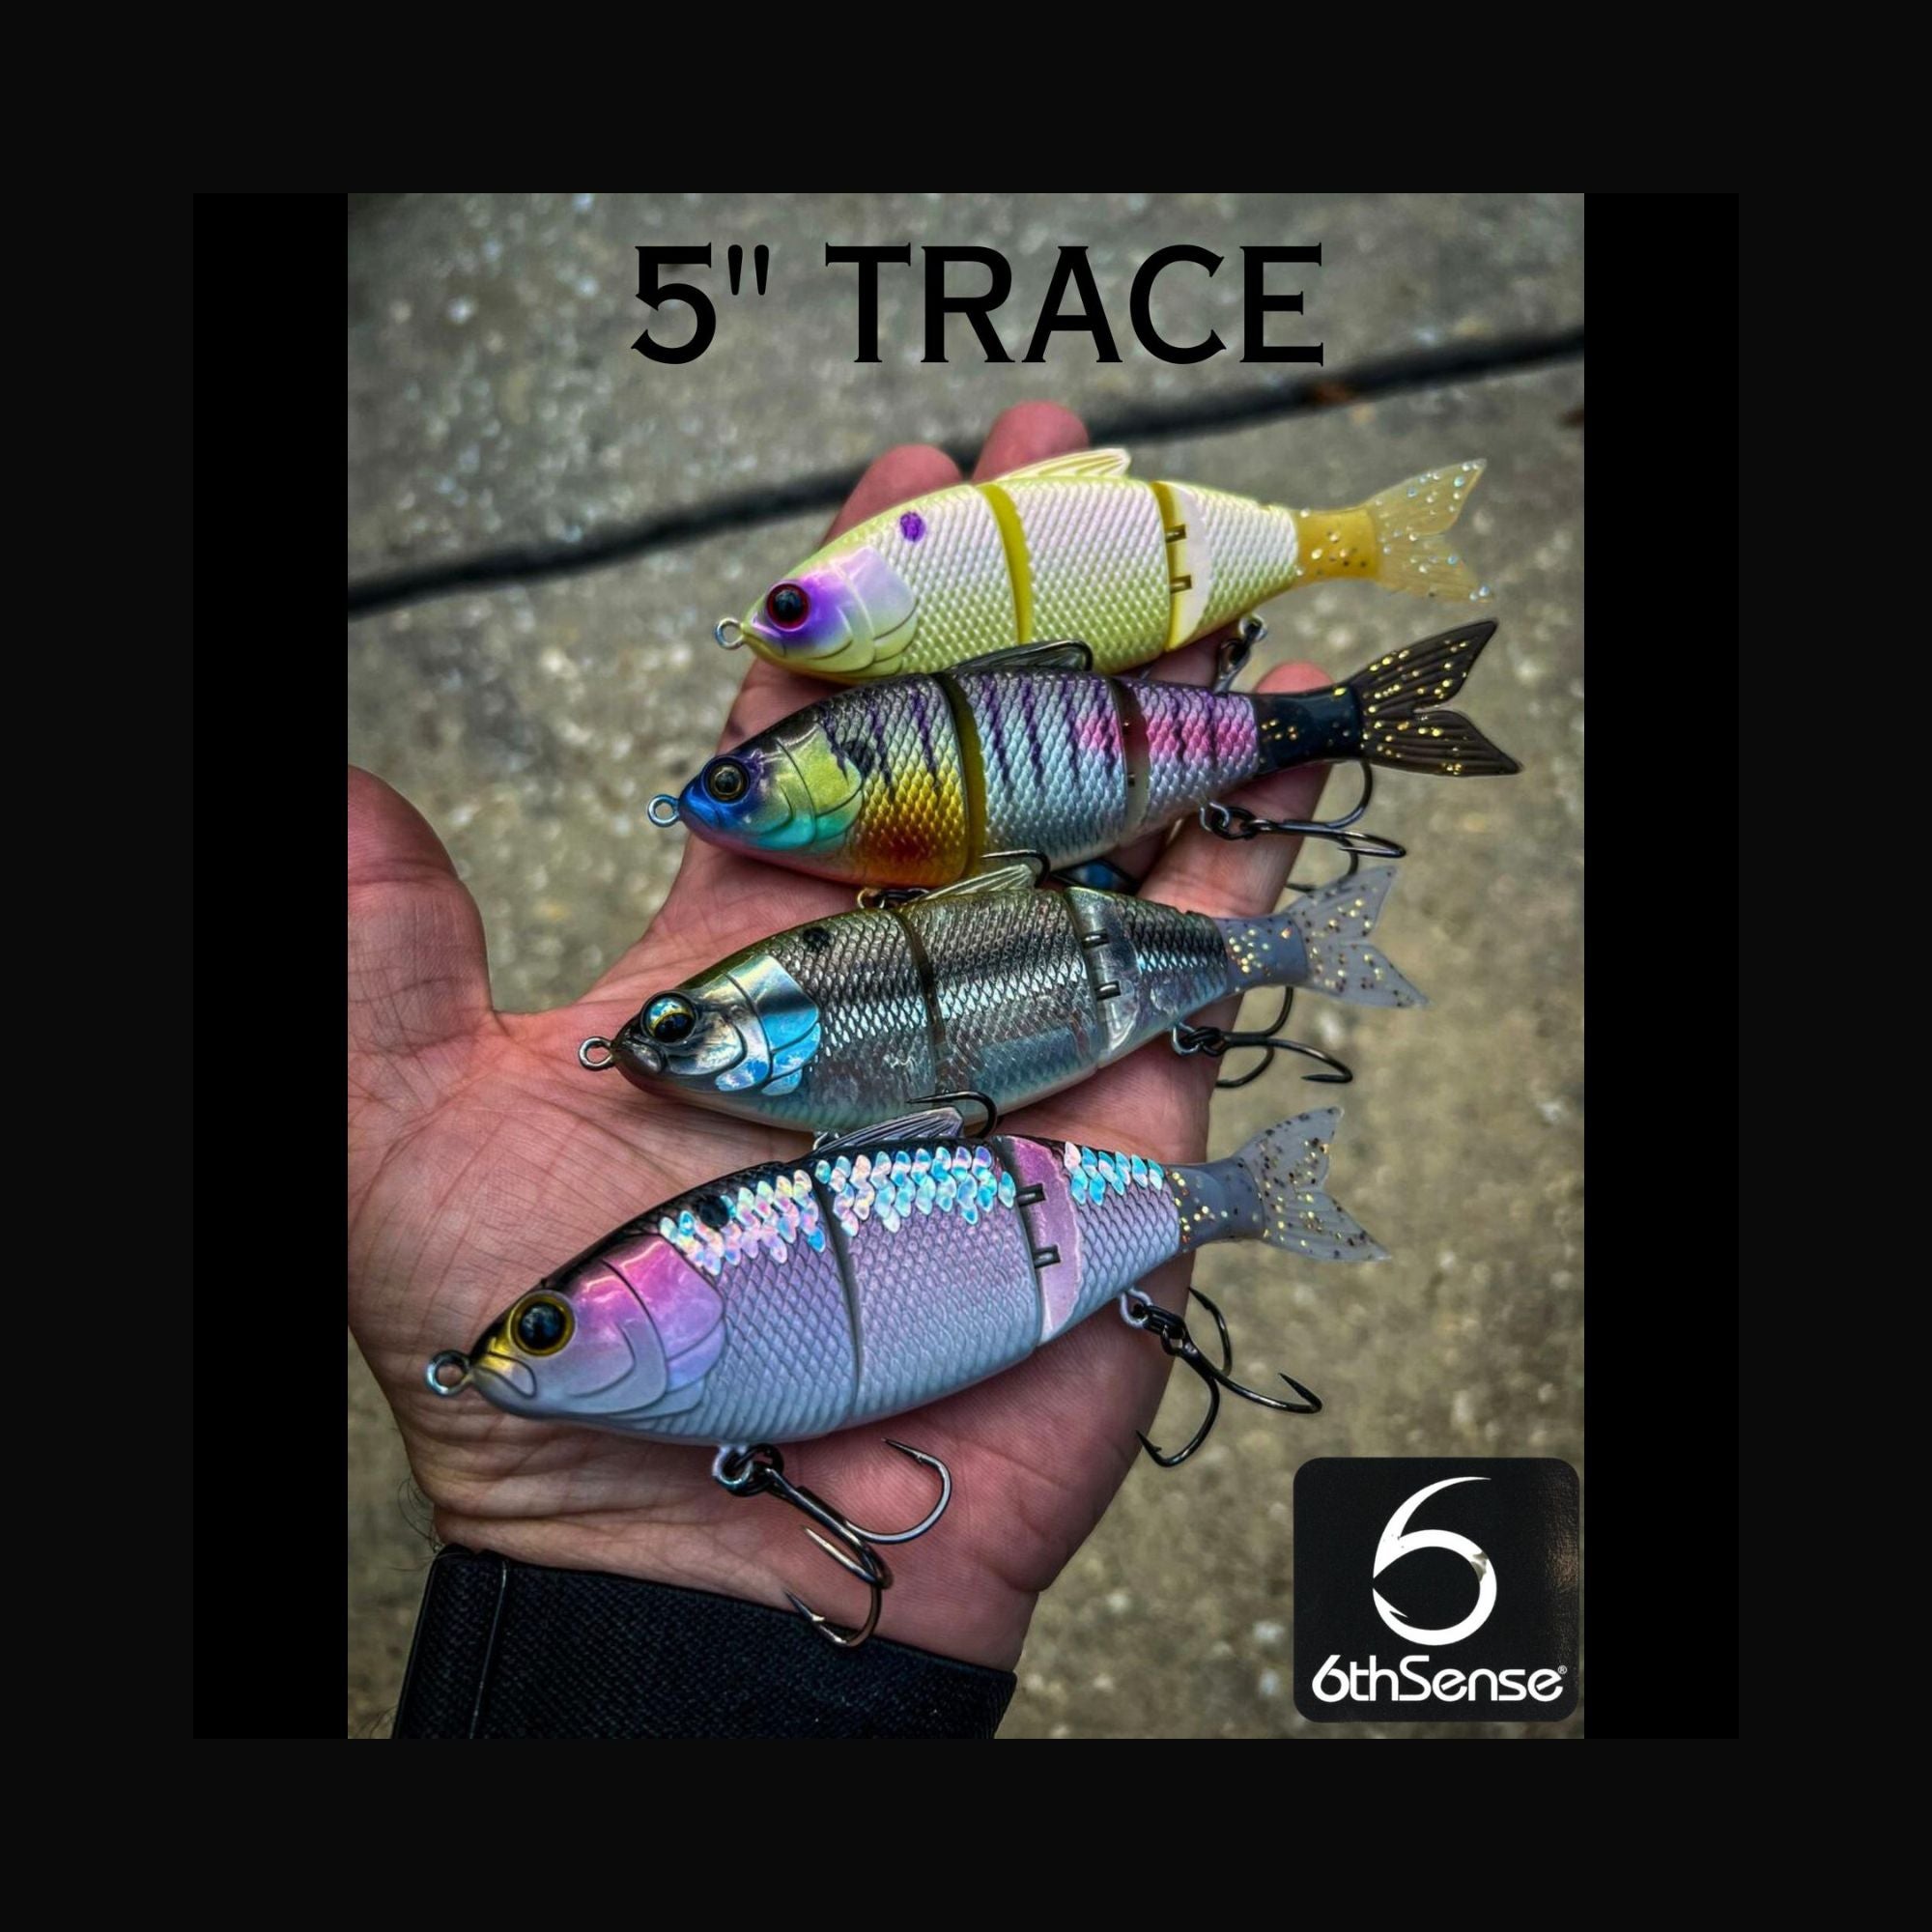 Trace 5 Swimbait, 6th Sense Fishing, 4 piece hard bait